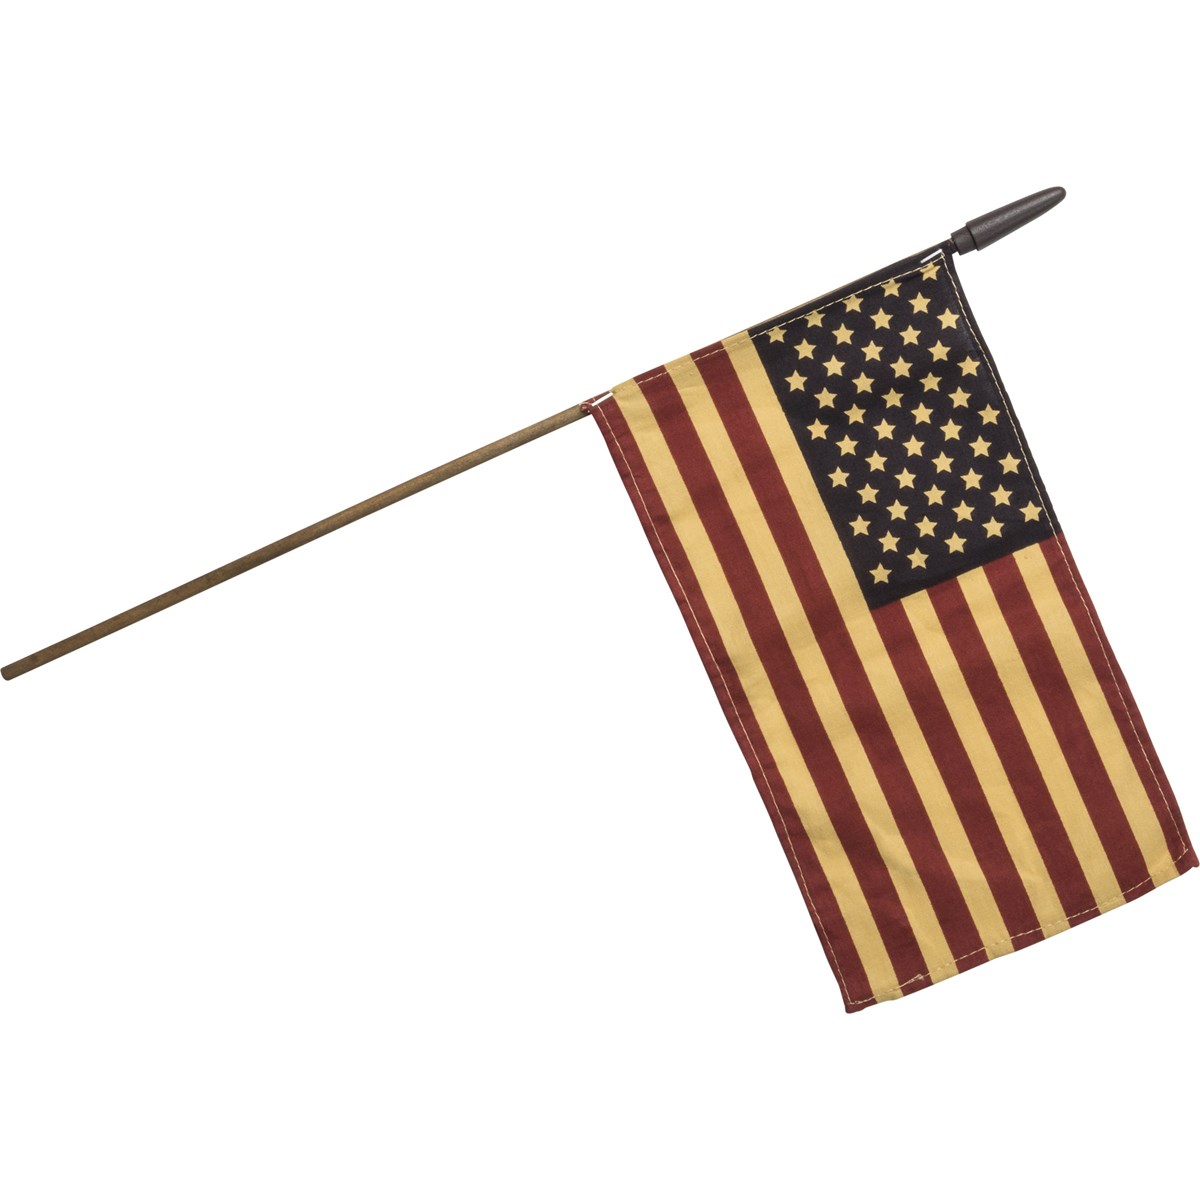 Primitive American Flag Med - 10.75" x 7", Stick: 18" - Fabric, Wood